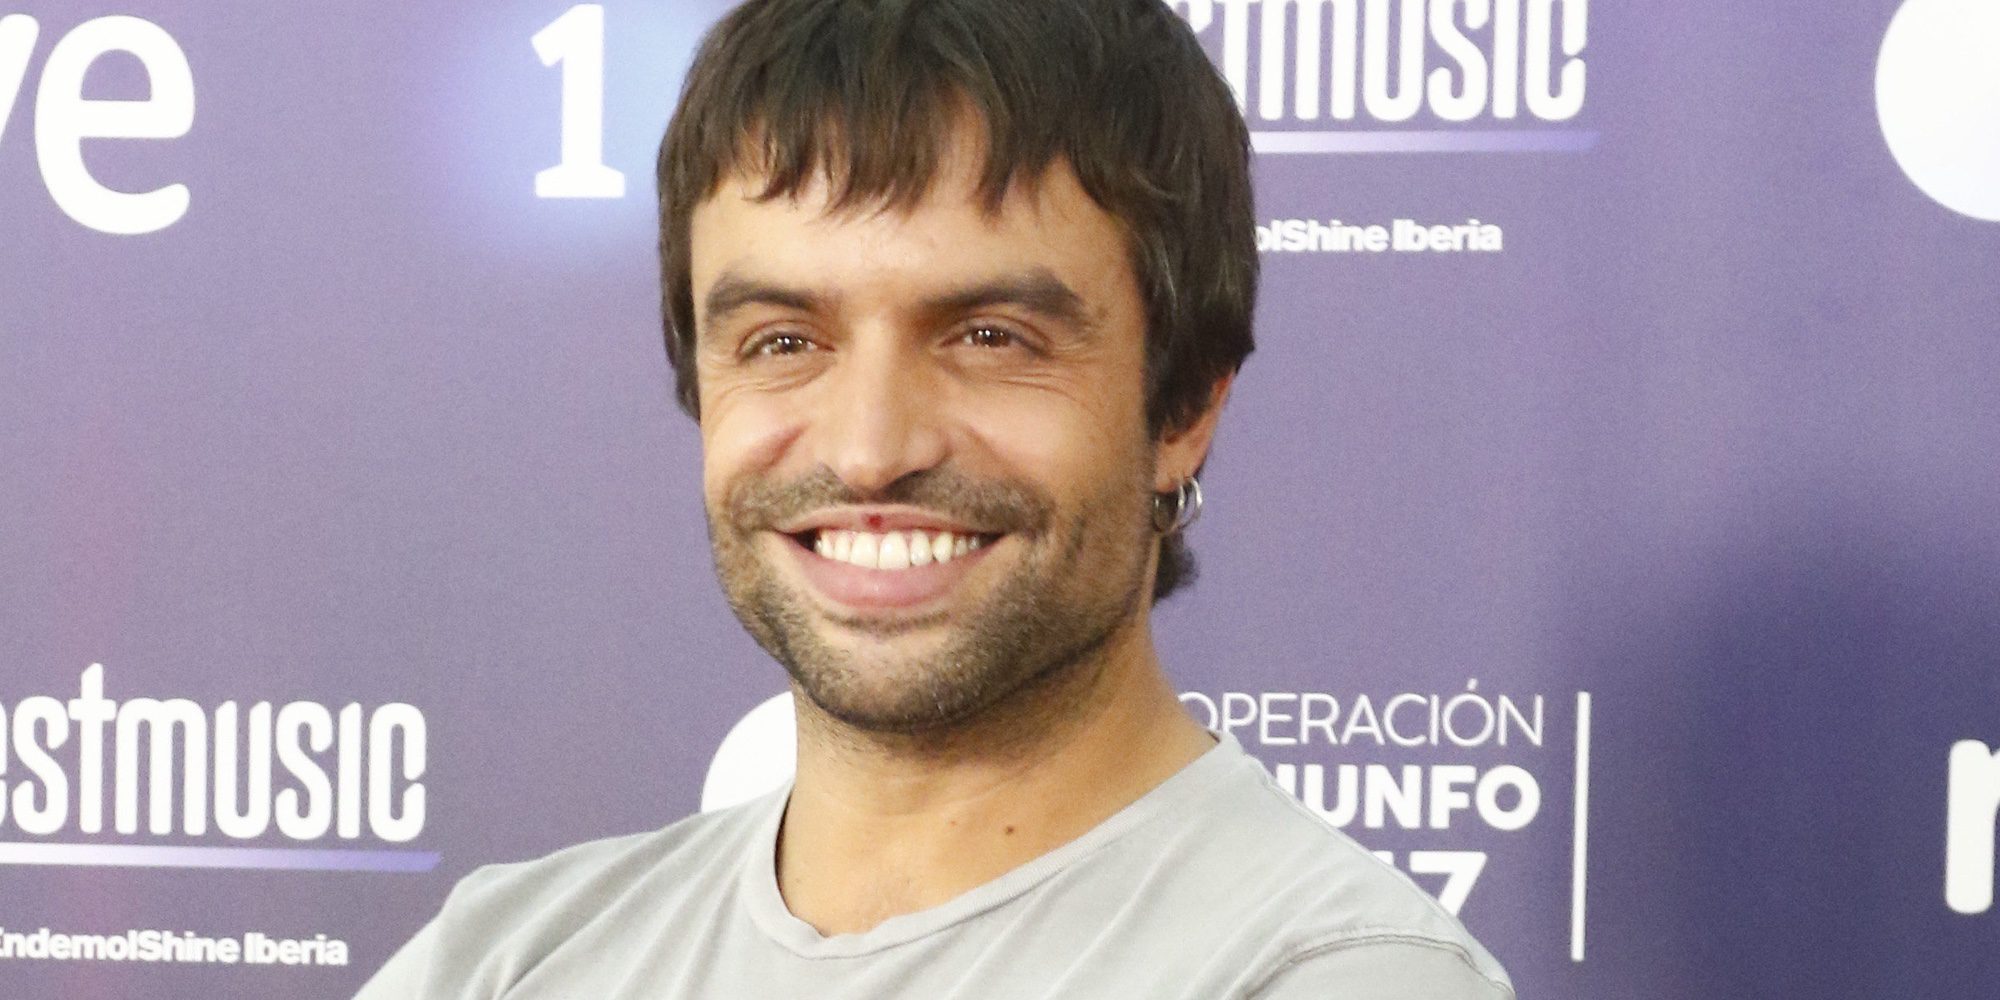 Manu Guix, director musical de 'Operación triunfo', ha sido padre de una niña